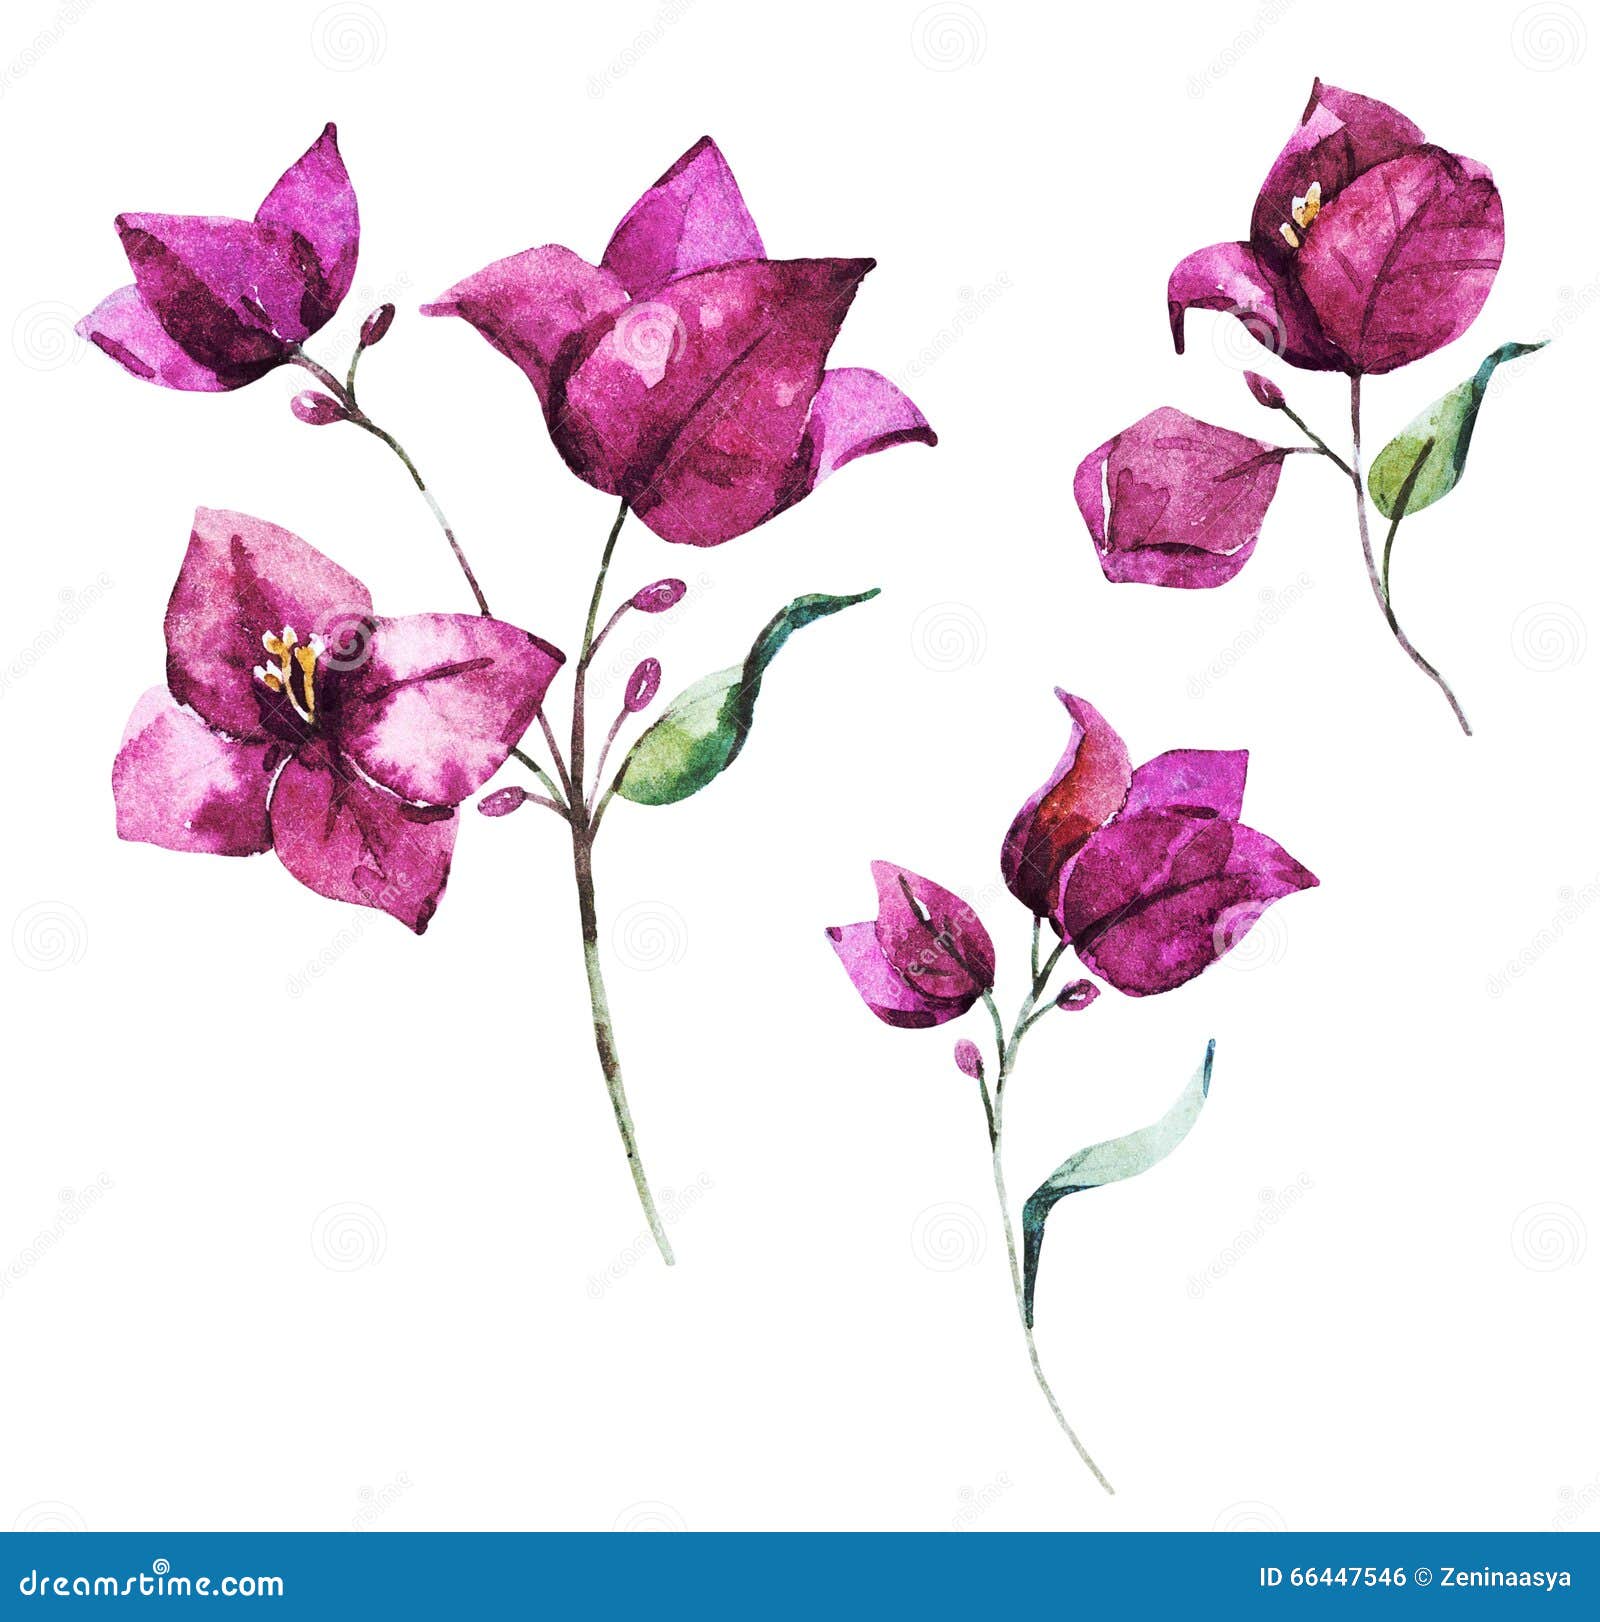 watercolor raster bougainvillea flowers